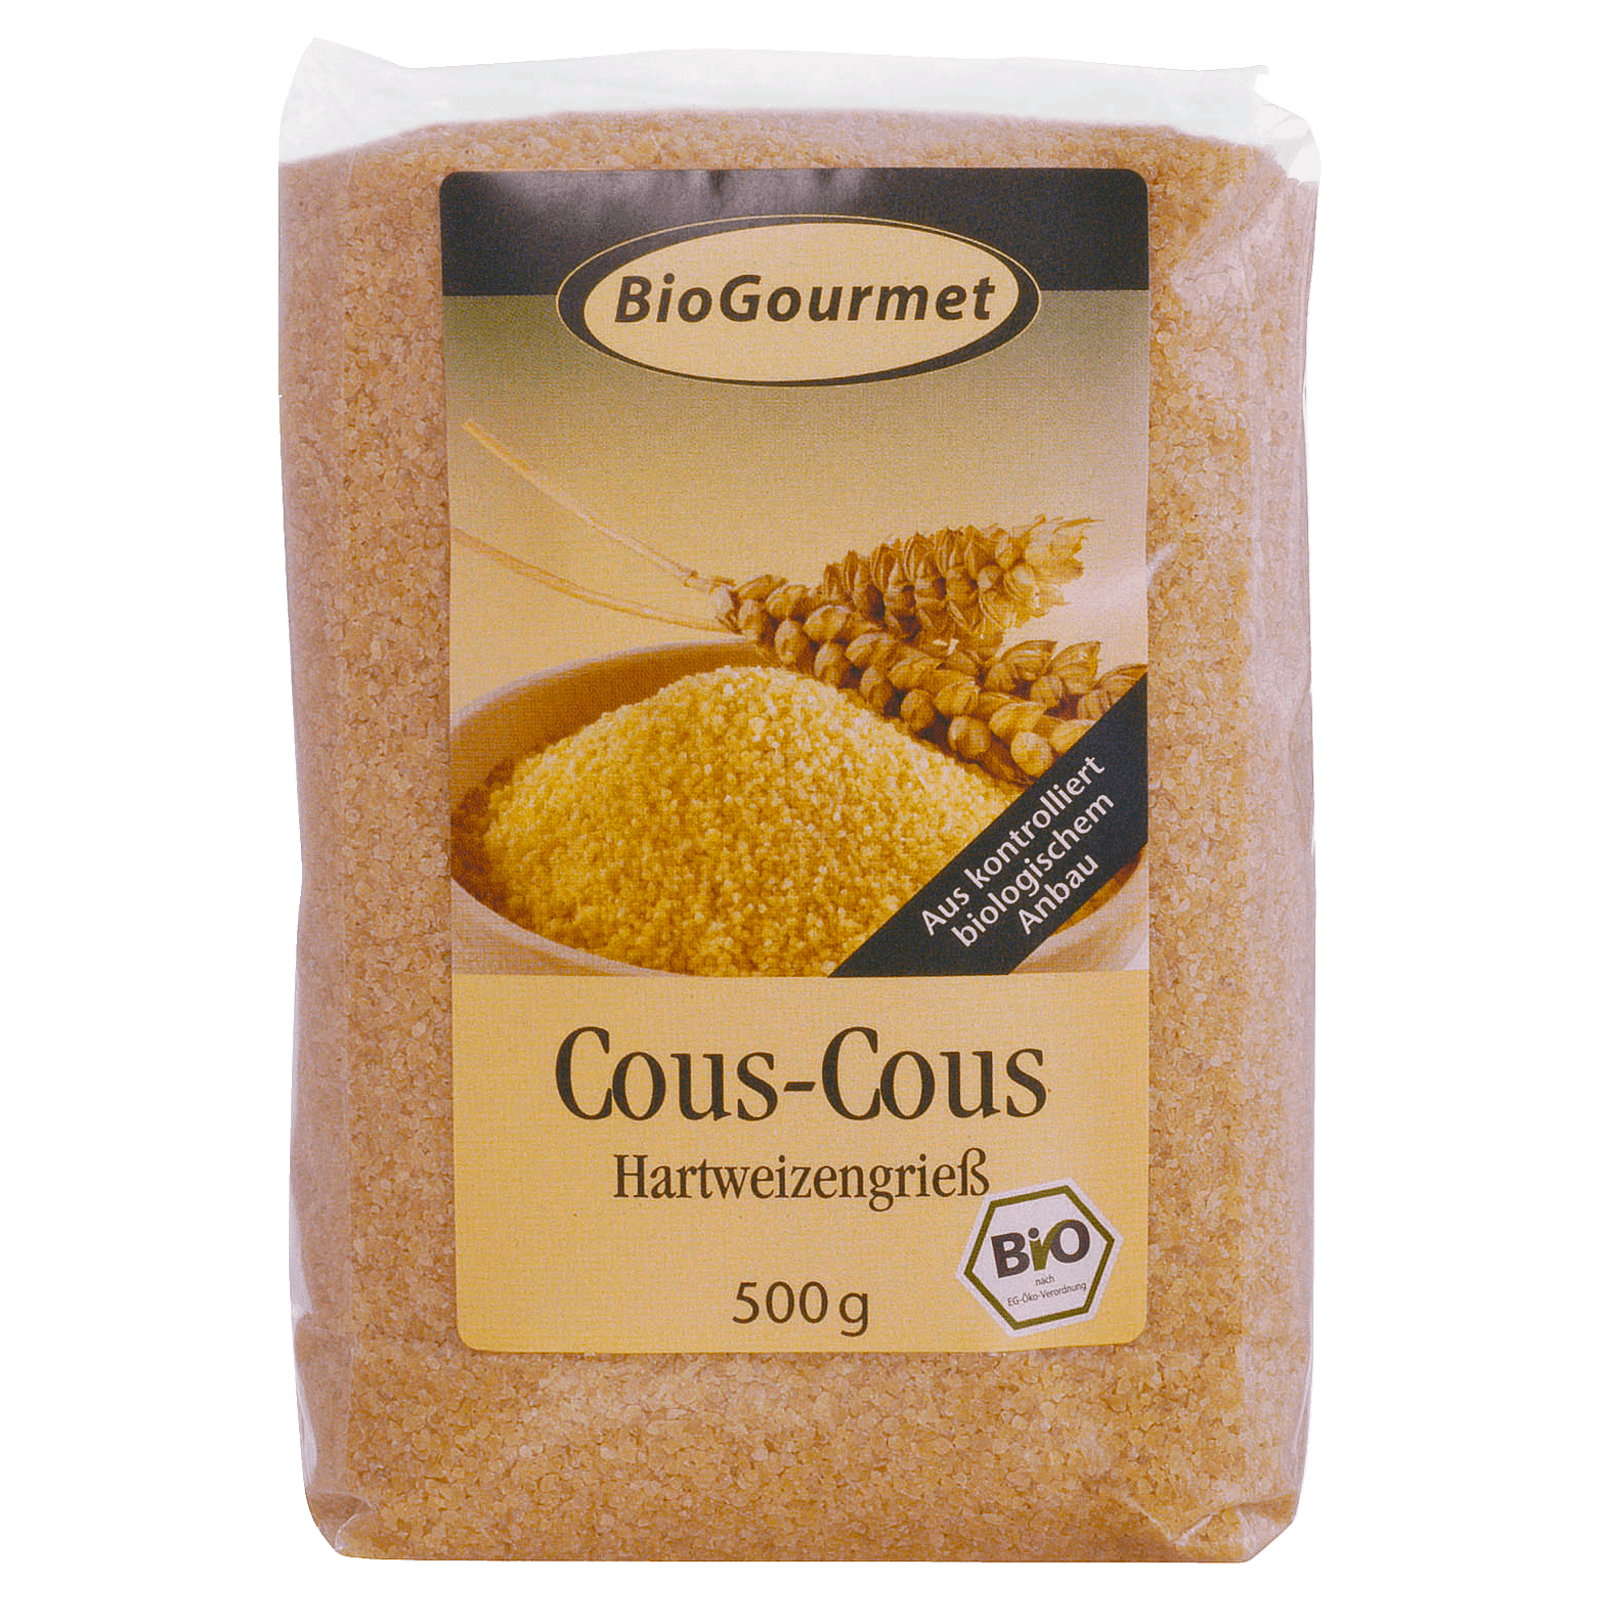 BioGourmet Cous-Cous bio 500g  für 3.29 EUR